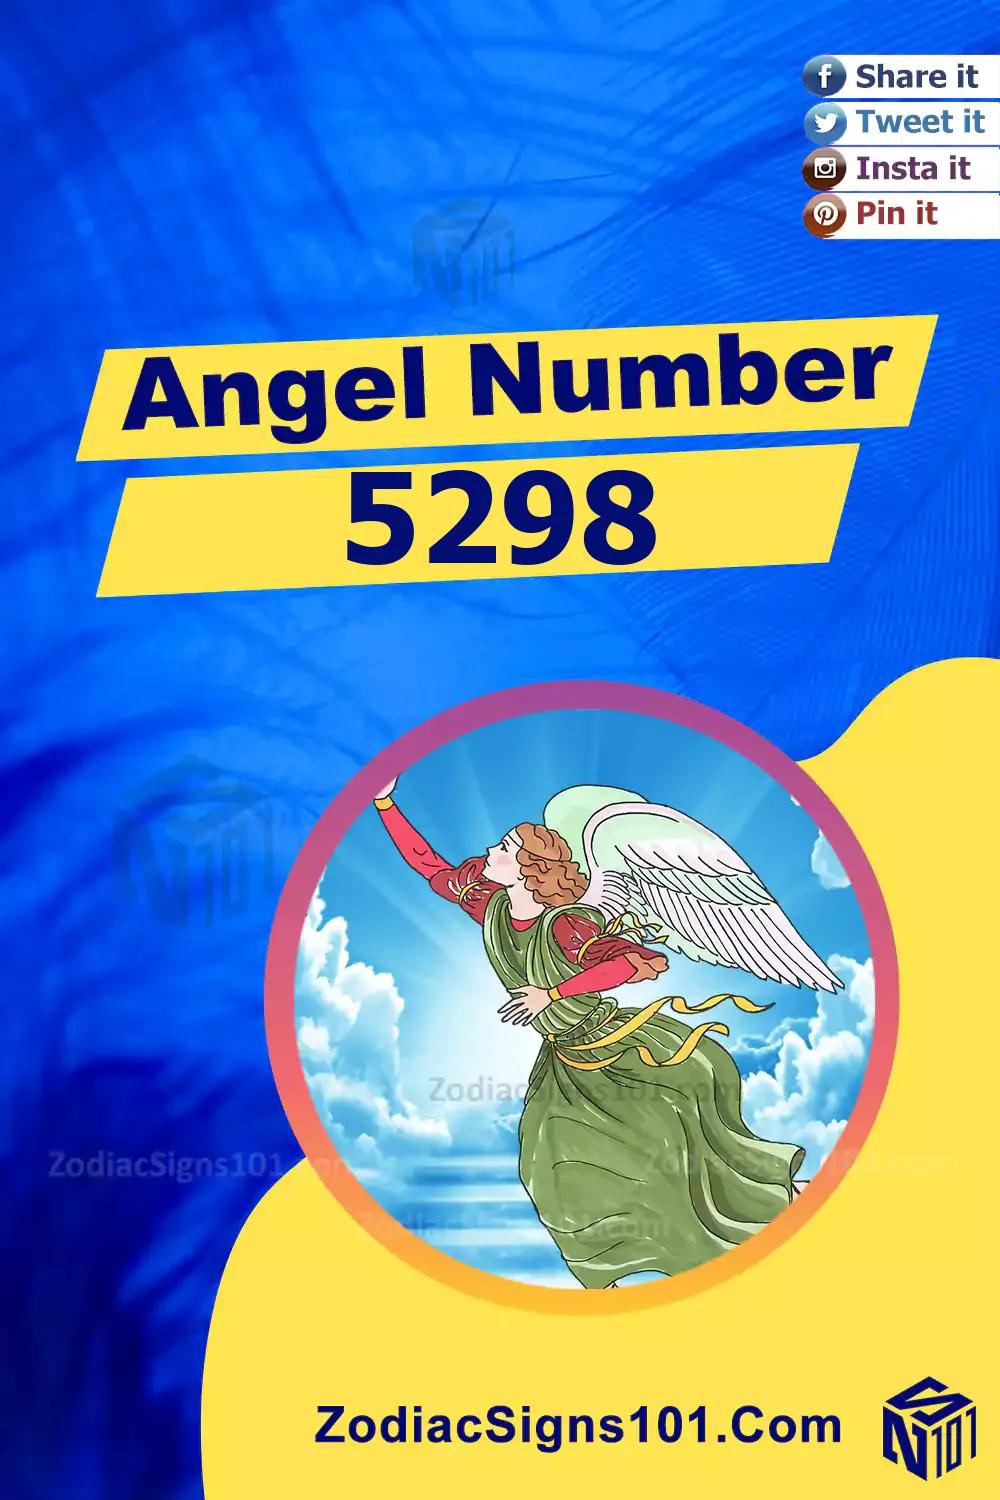 5298-Angel-Number-Meaning.jpg